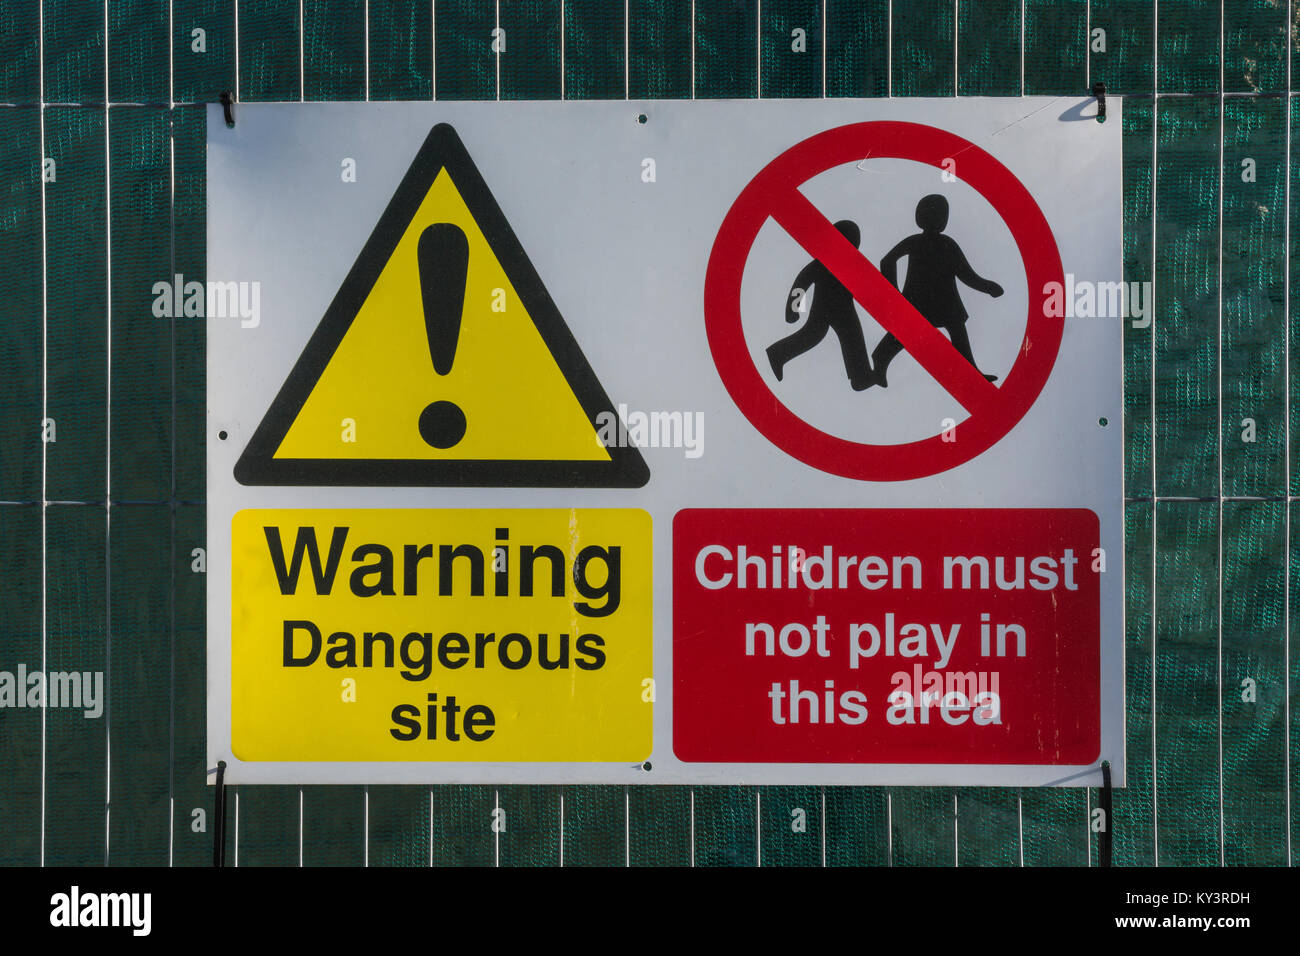 Building site danger warning signs - Children's warning sign 'Dont play here', building site fence. Stock Photo